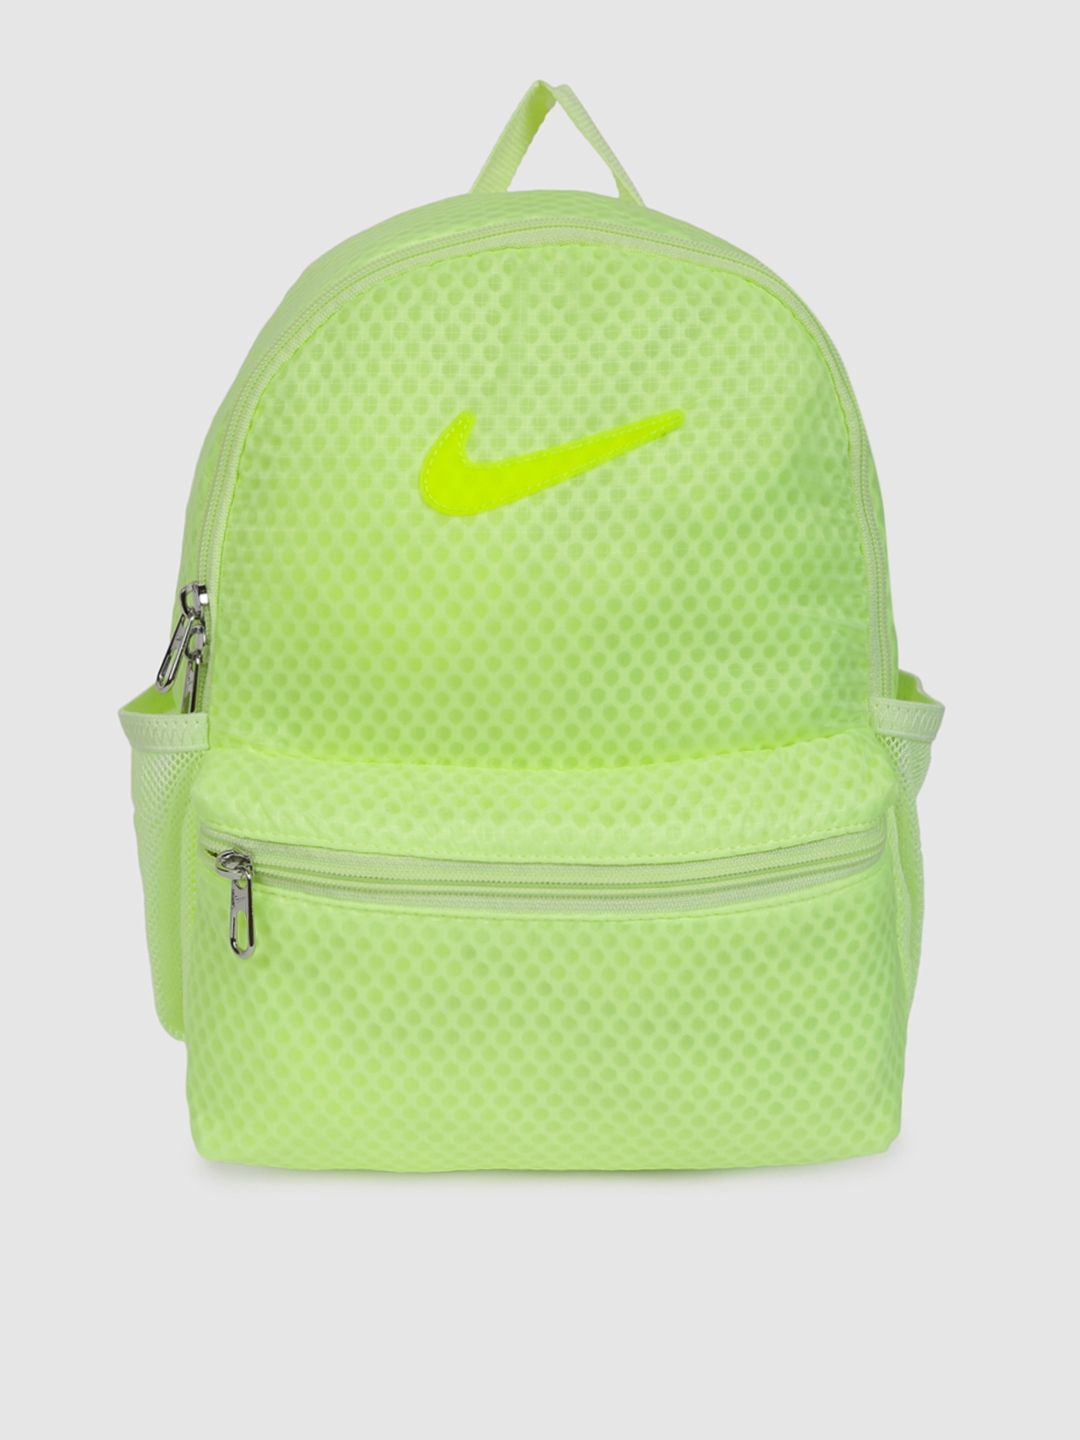 Buy Nike Unisex Kids Lime Green Solid Backpack Backpacks for Unisex